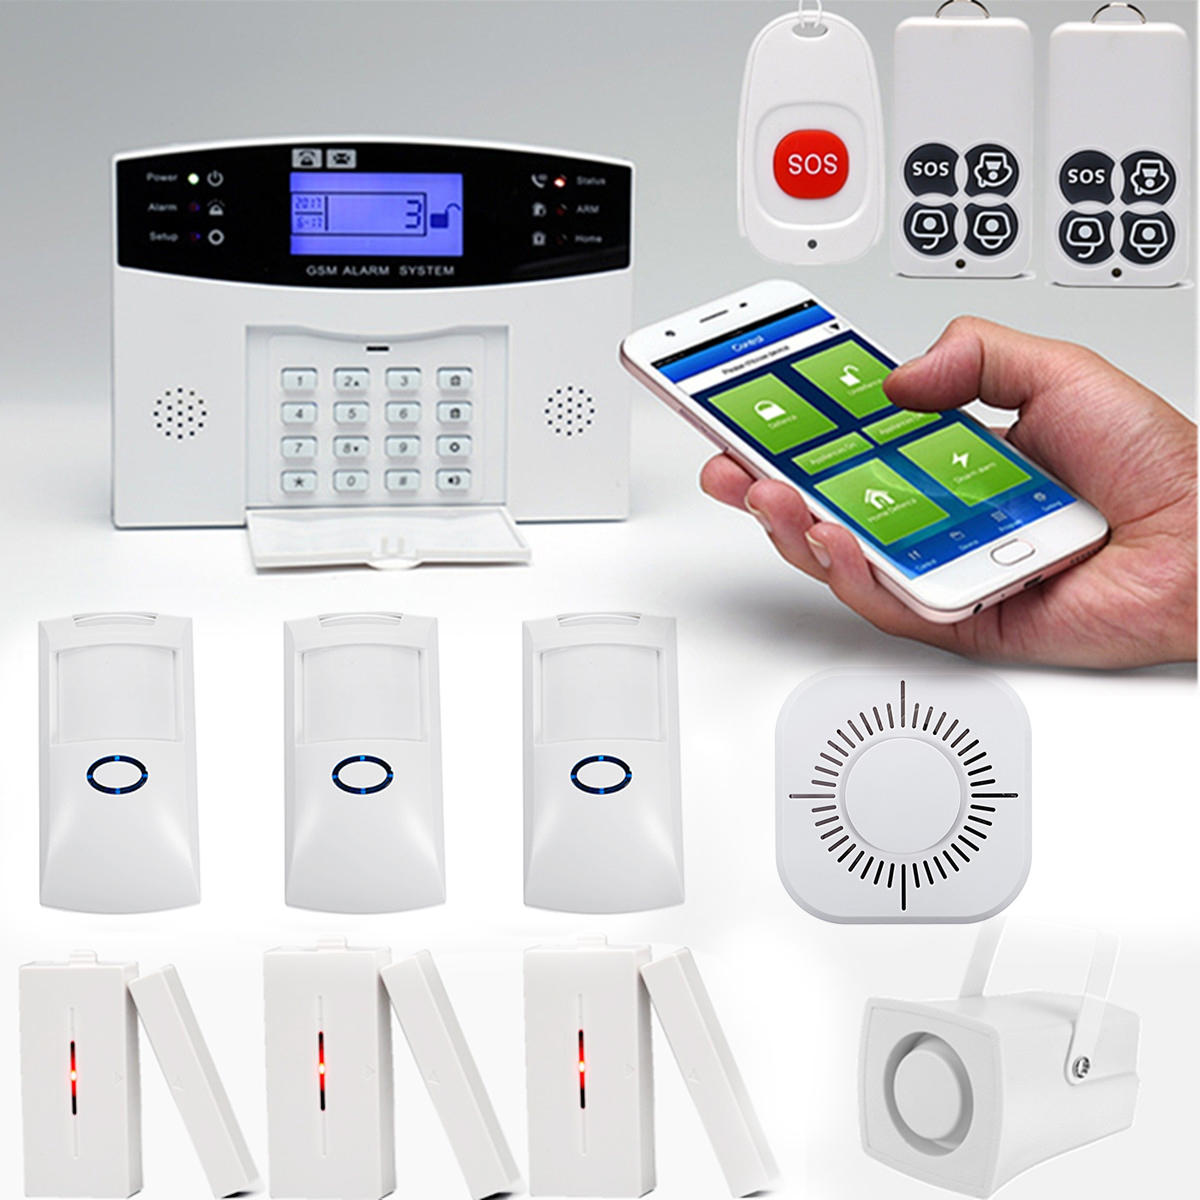 Sms охрана. GSM Security. Home safe Wireless Control. Home Burglar Alarm fkn'rcghtcc. A Burglar Alarm PNG.